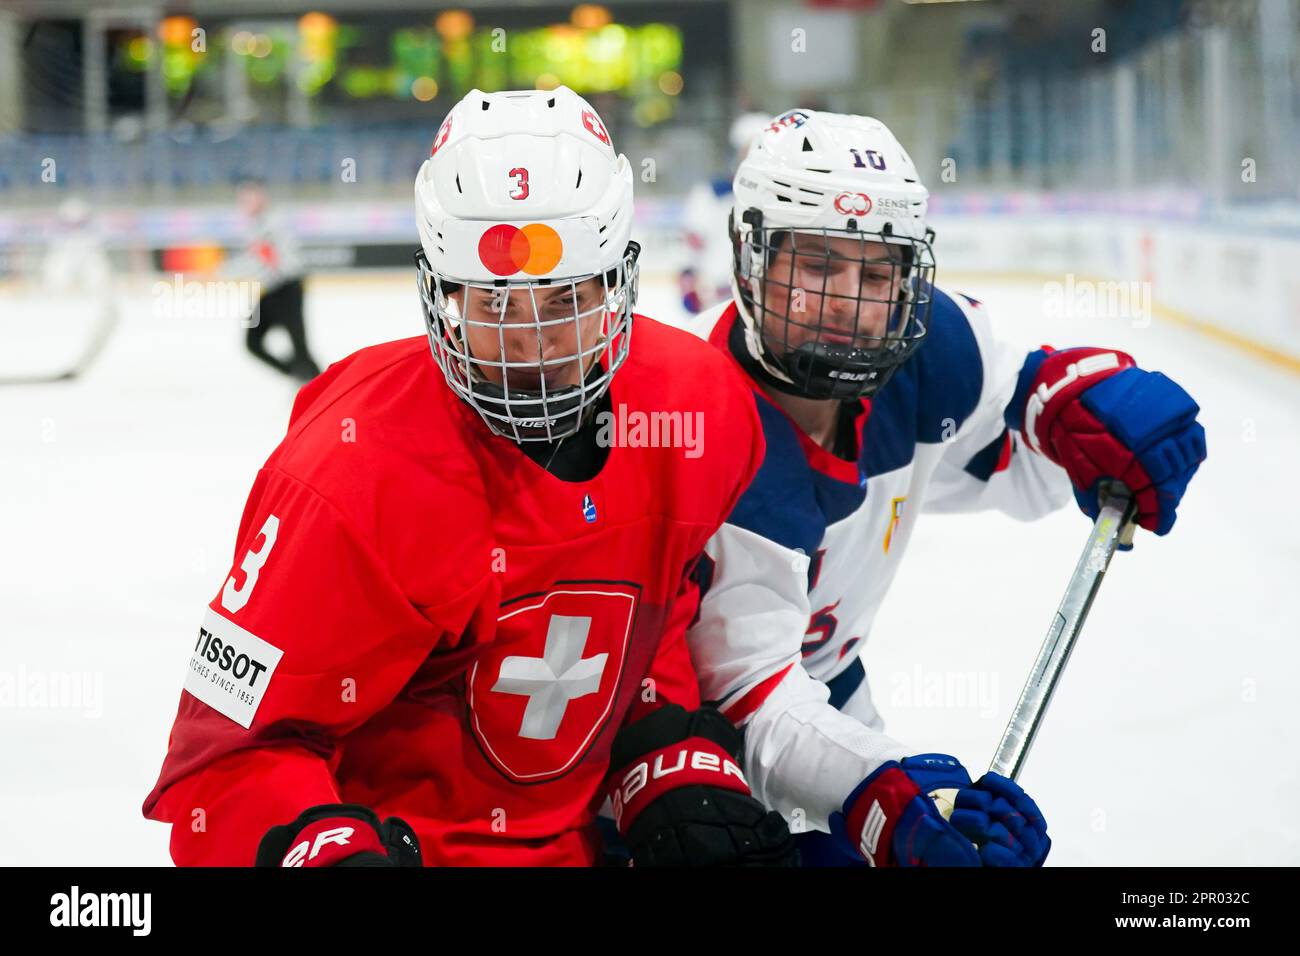 Basel, St. Jakob Arena, IIHF Ice Hockey U18 World Championship, Switzerland